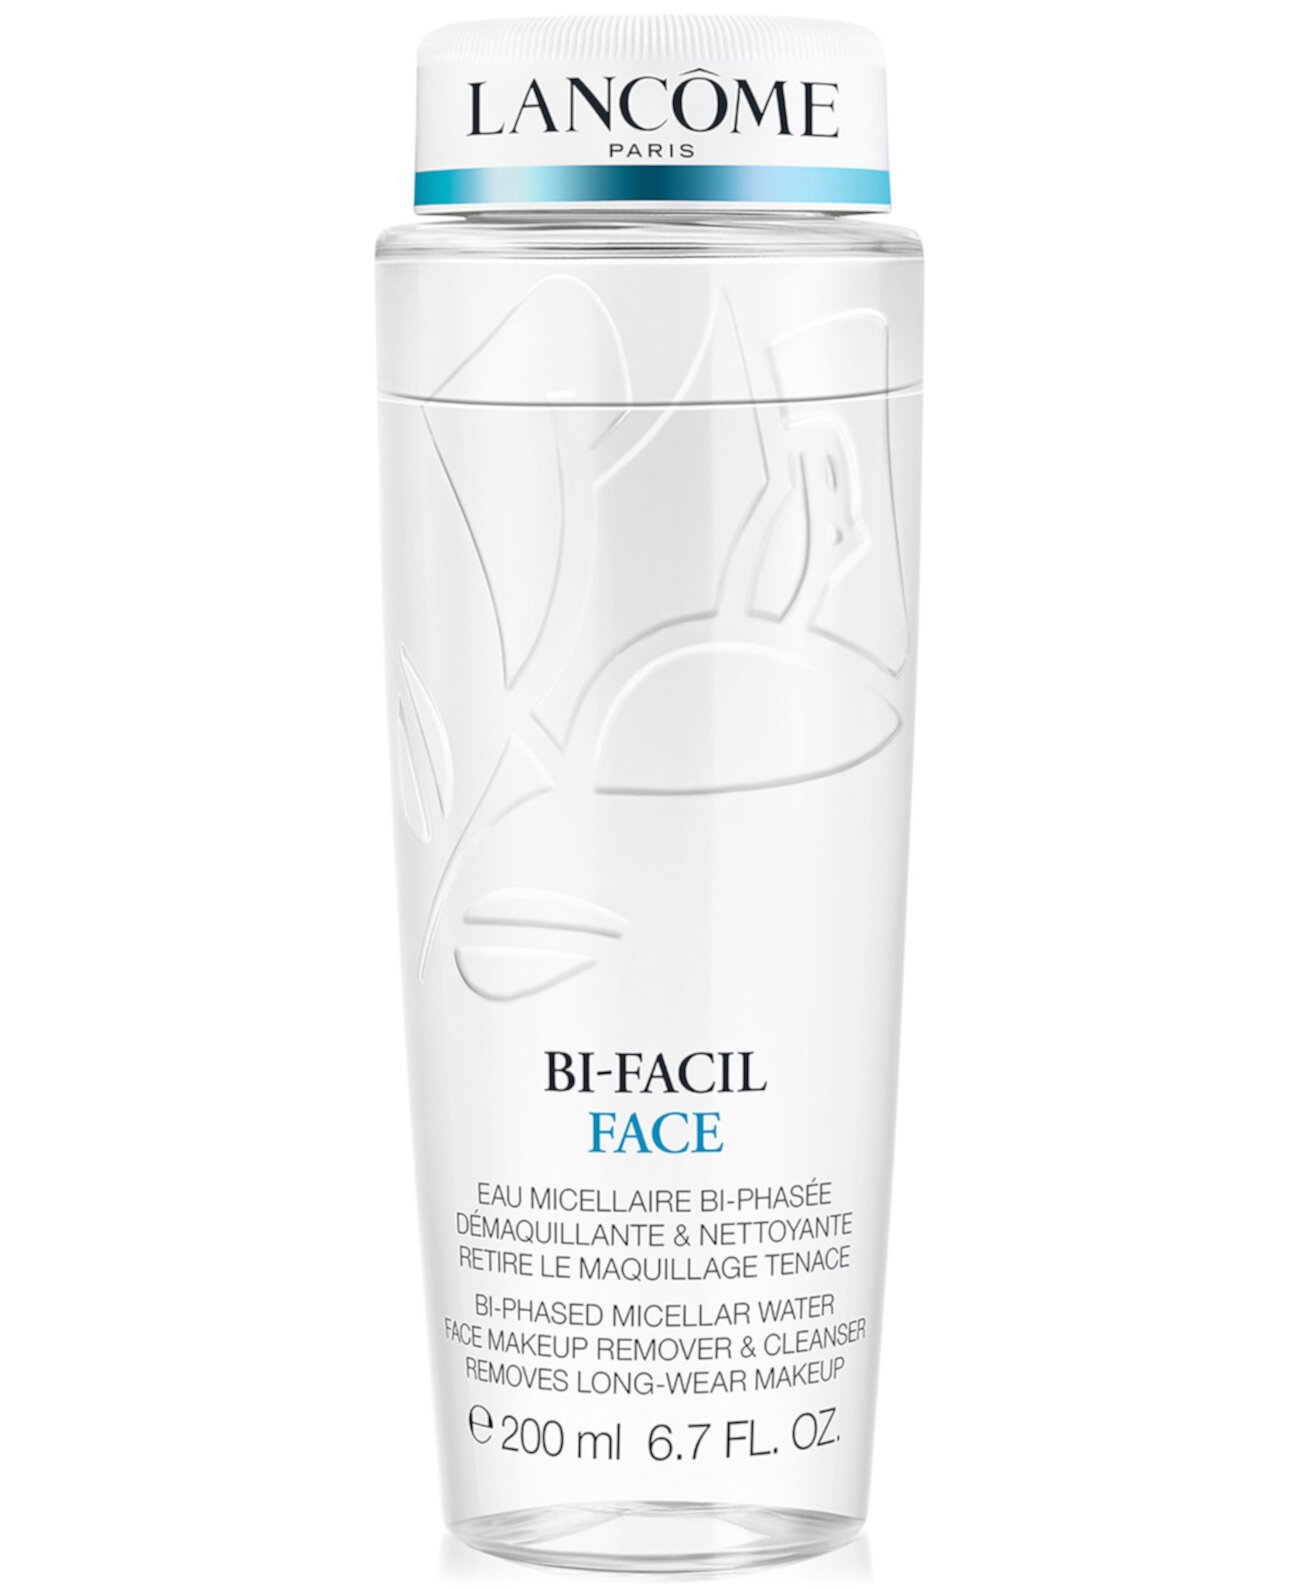 Bi-Facil Face Бифазная мицеллярная вода, 6,7 унции. Lancome